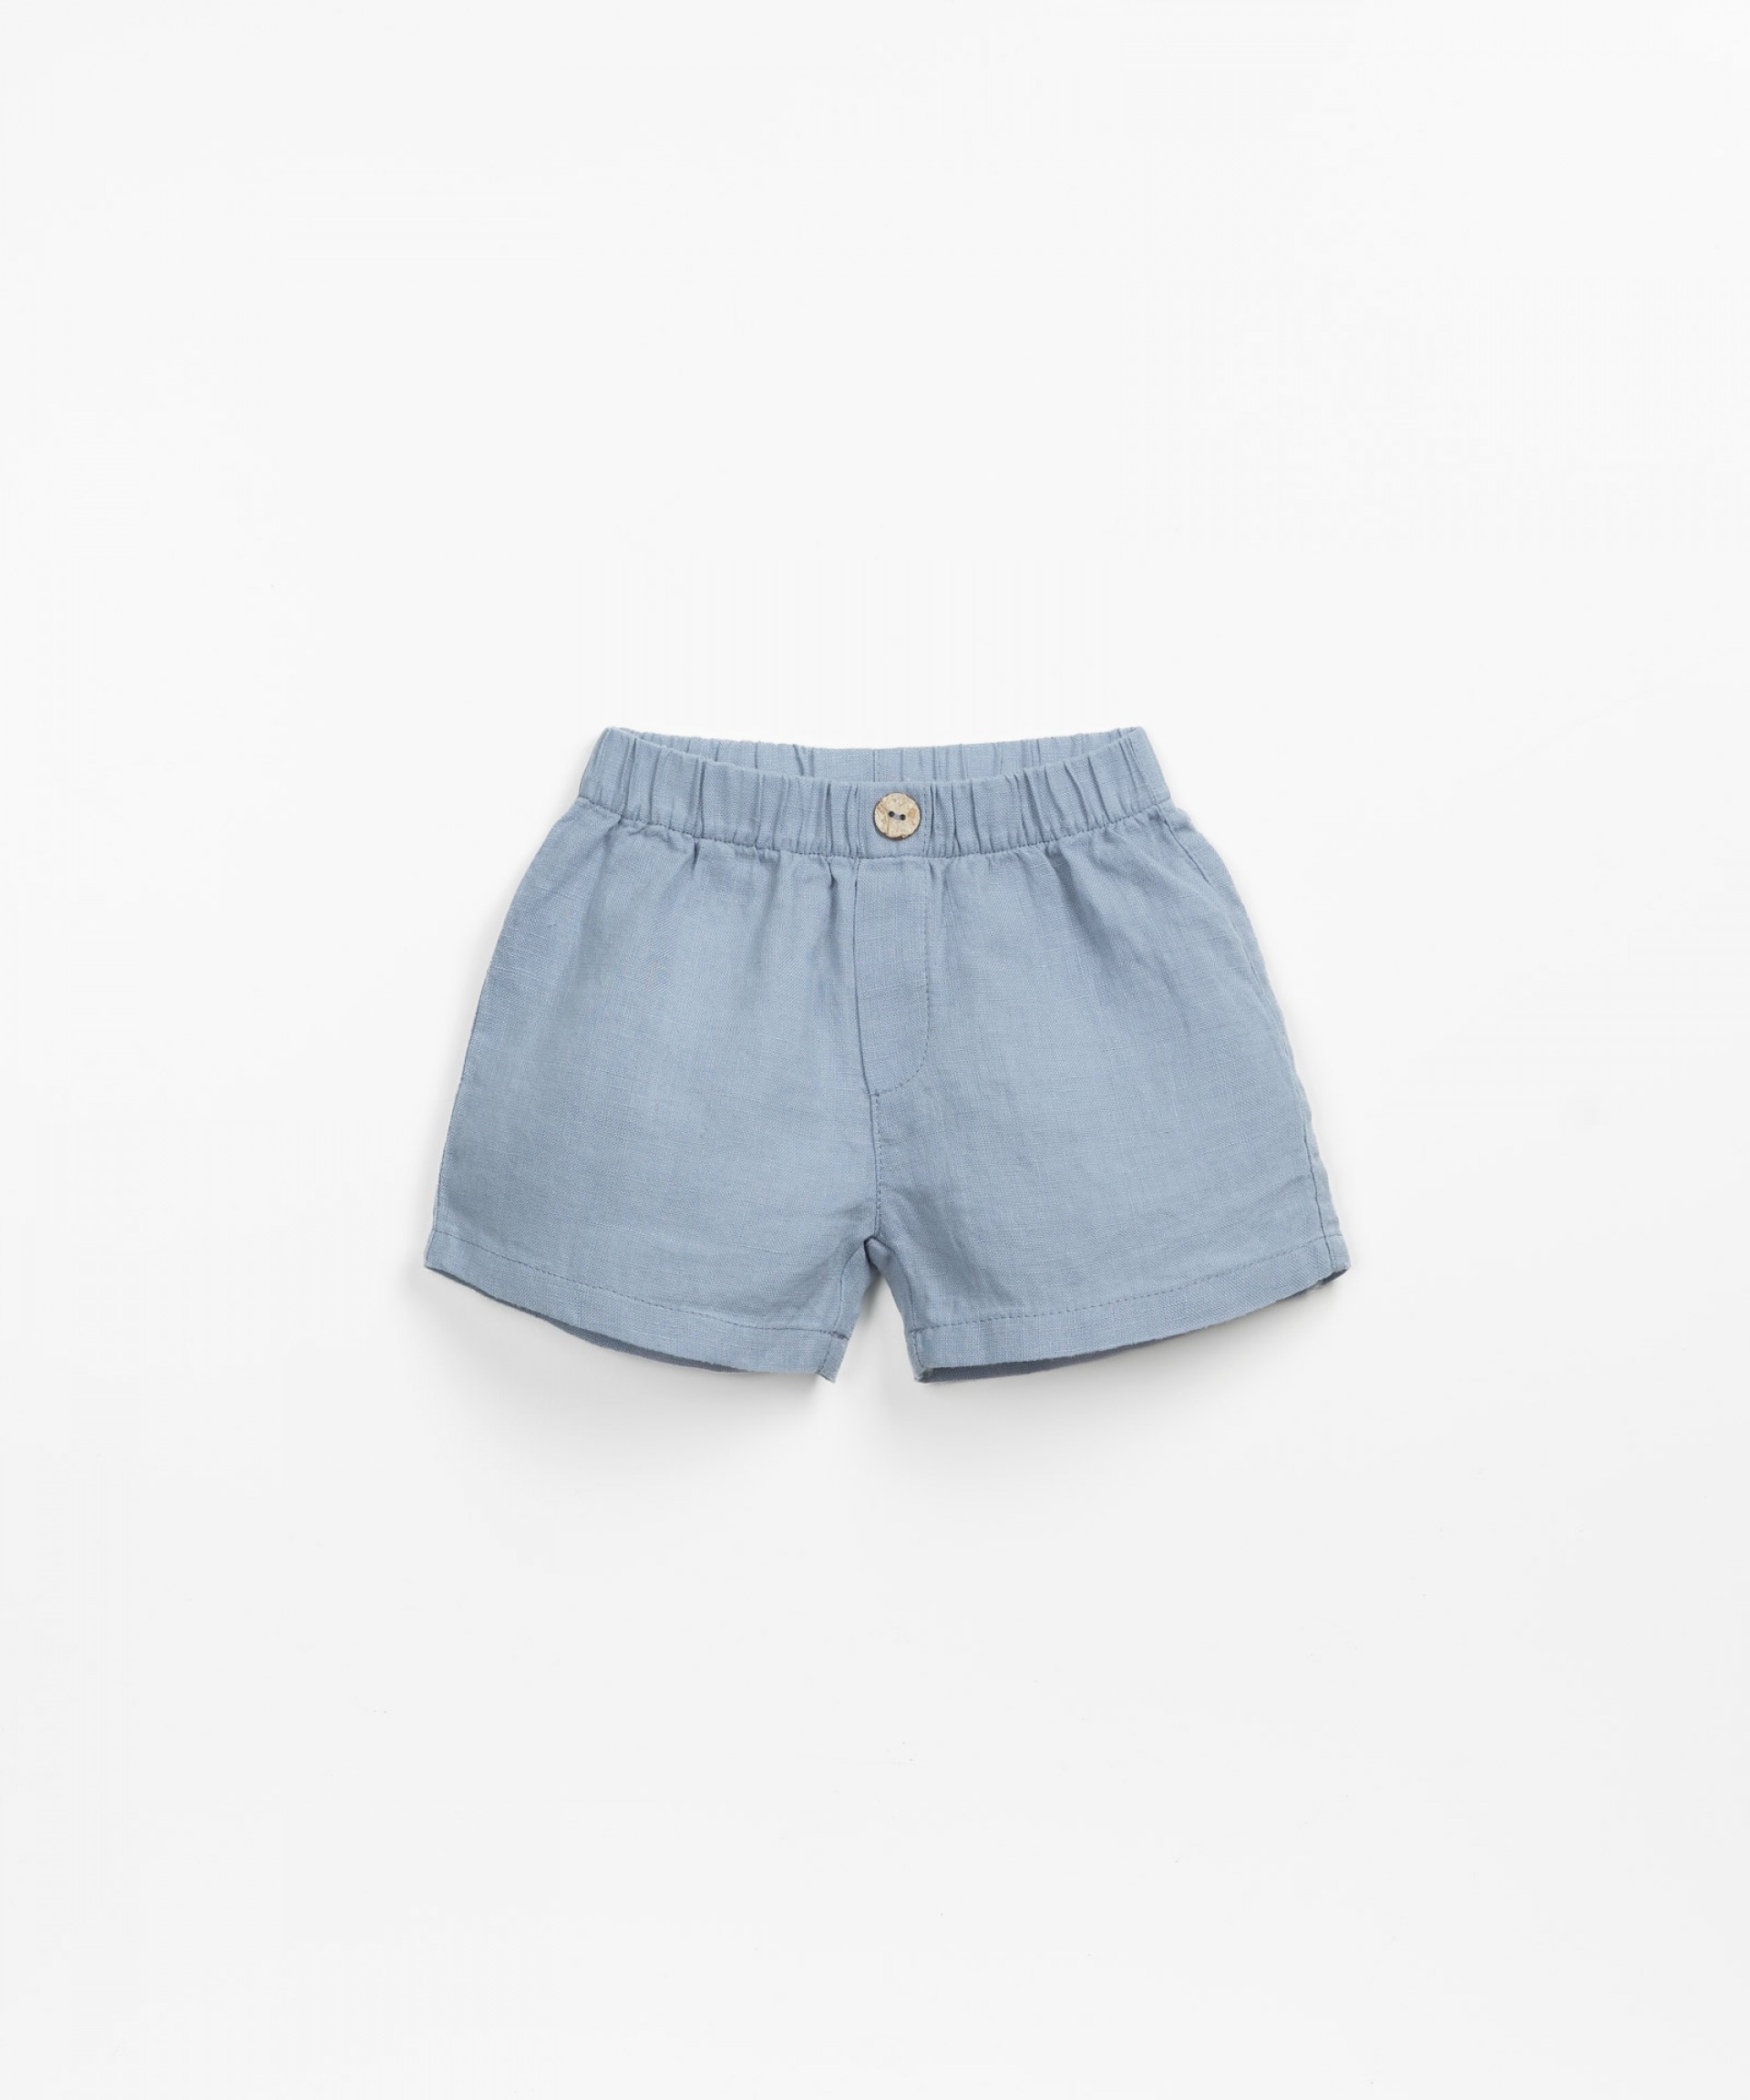 Linen shorts with rear pocket | Textile Art